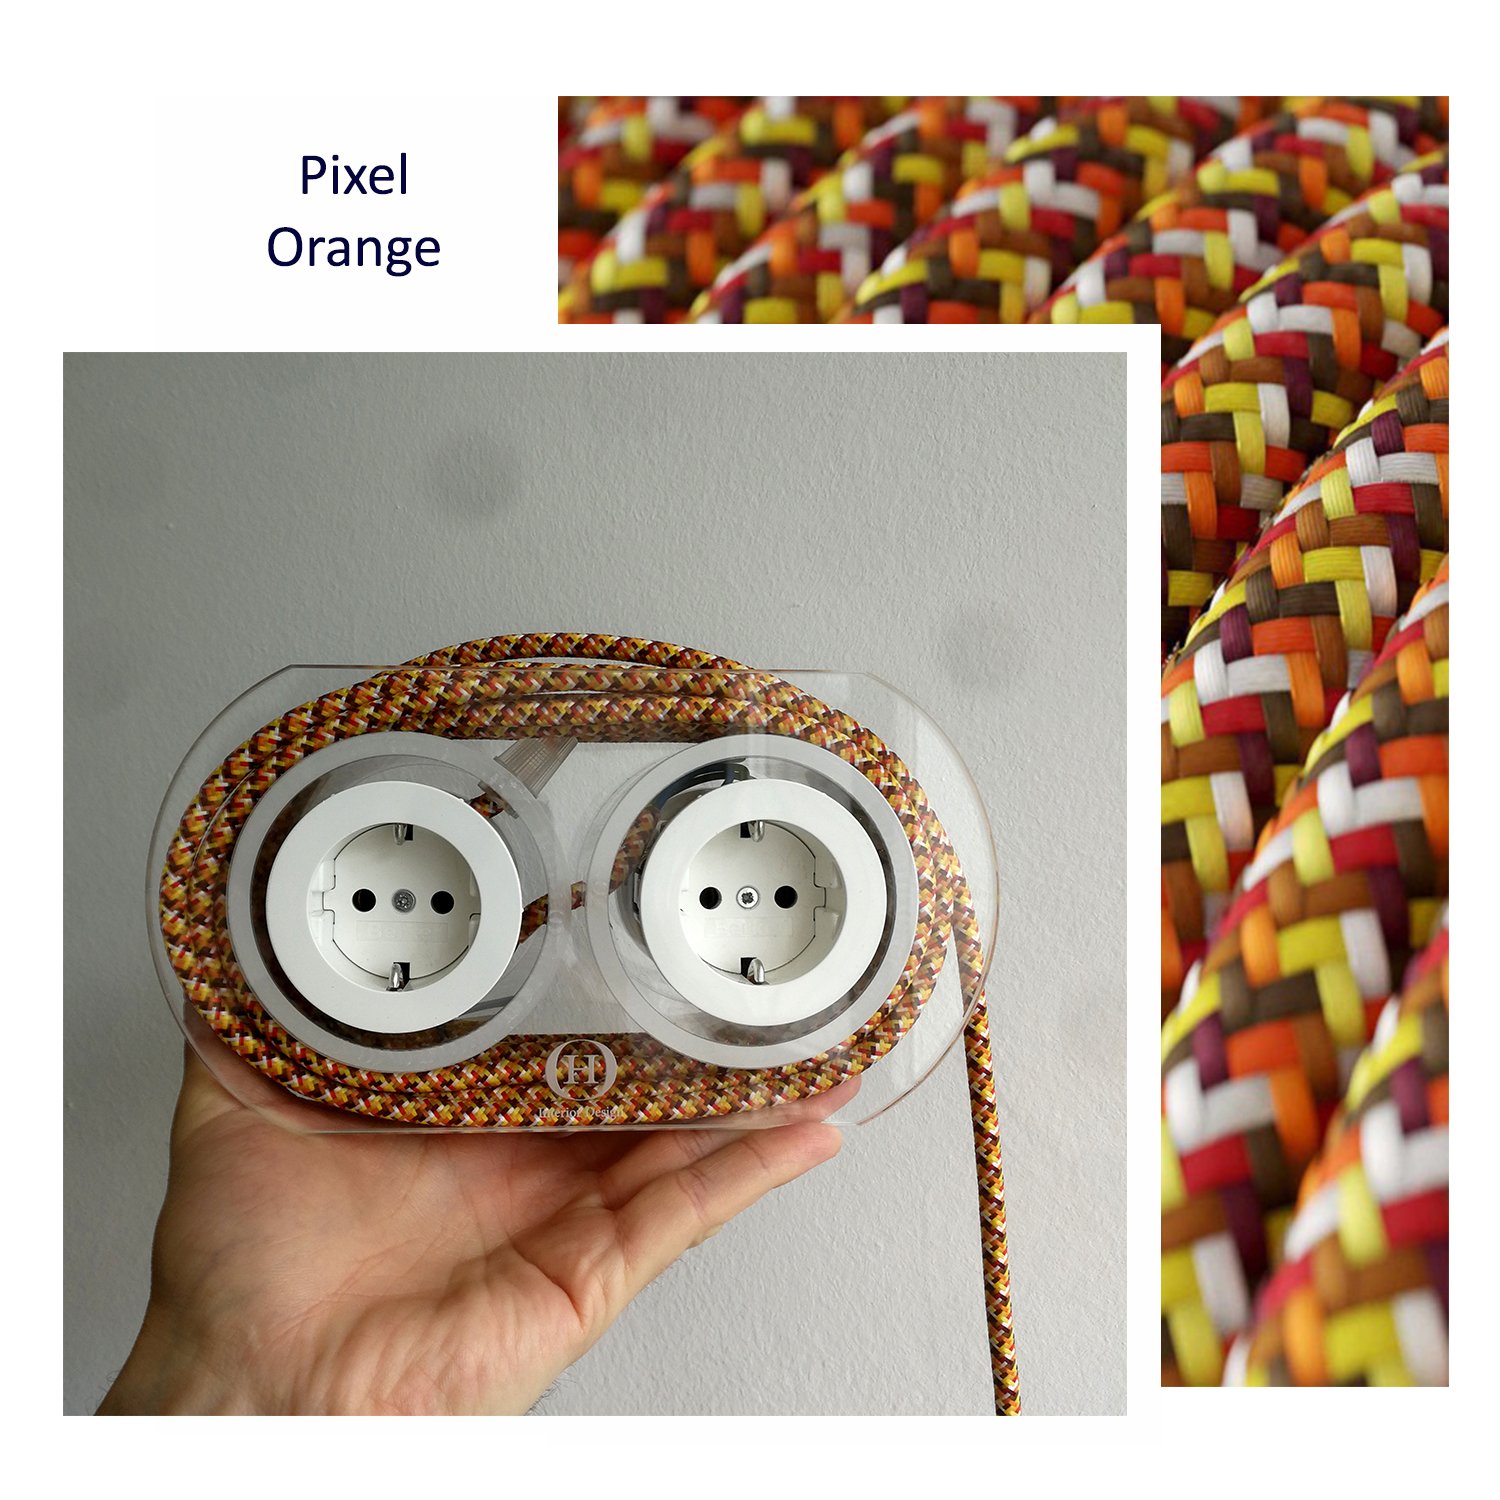 Extension Cord for 4 Plugs_Pixel Orange.jpg